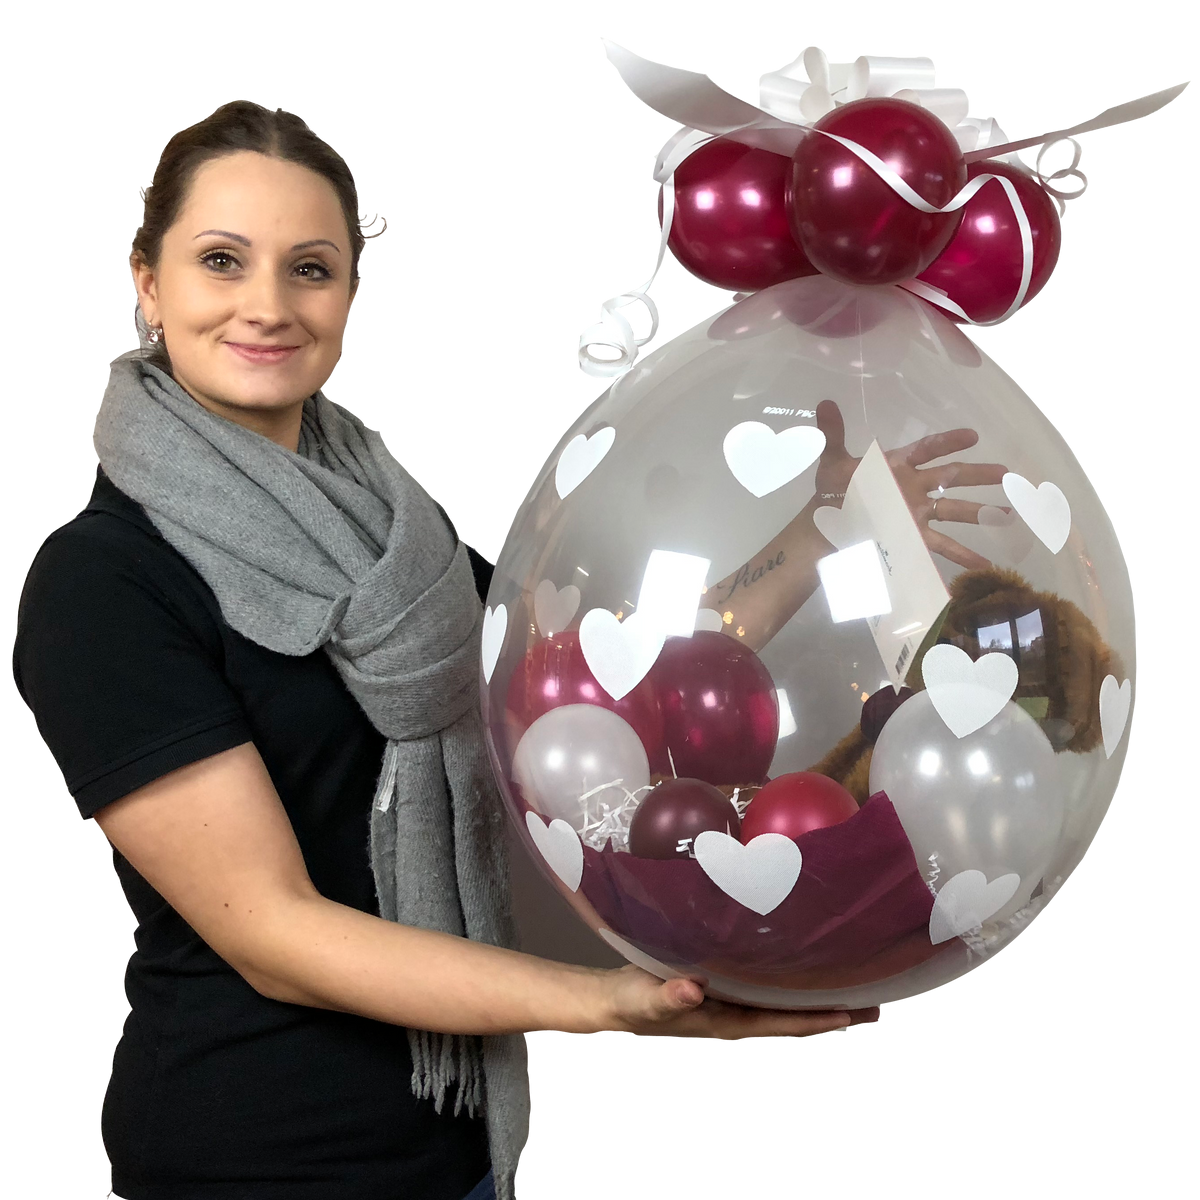 Подарок в воздушном шаре. ZIBI упаковщик. Упаковка подарка в шар. Подарок в шаре воздушном. Упаковщик шаров.